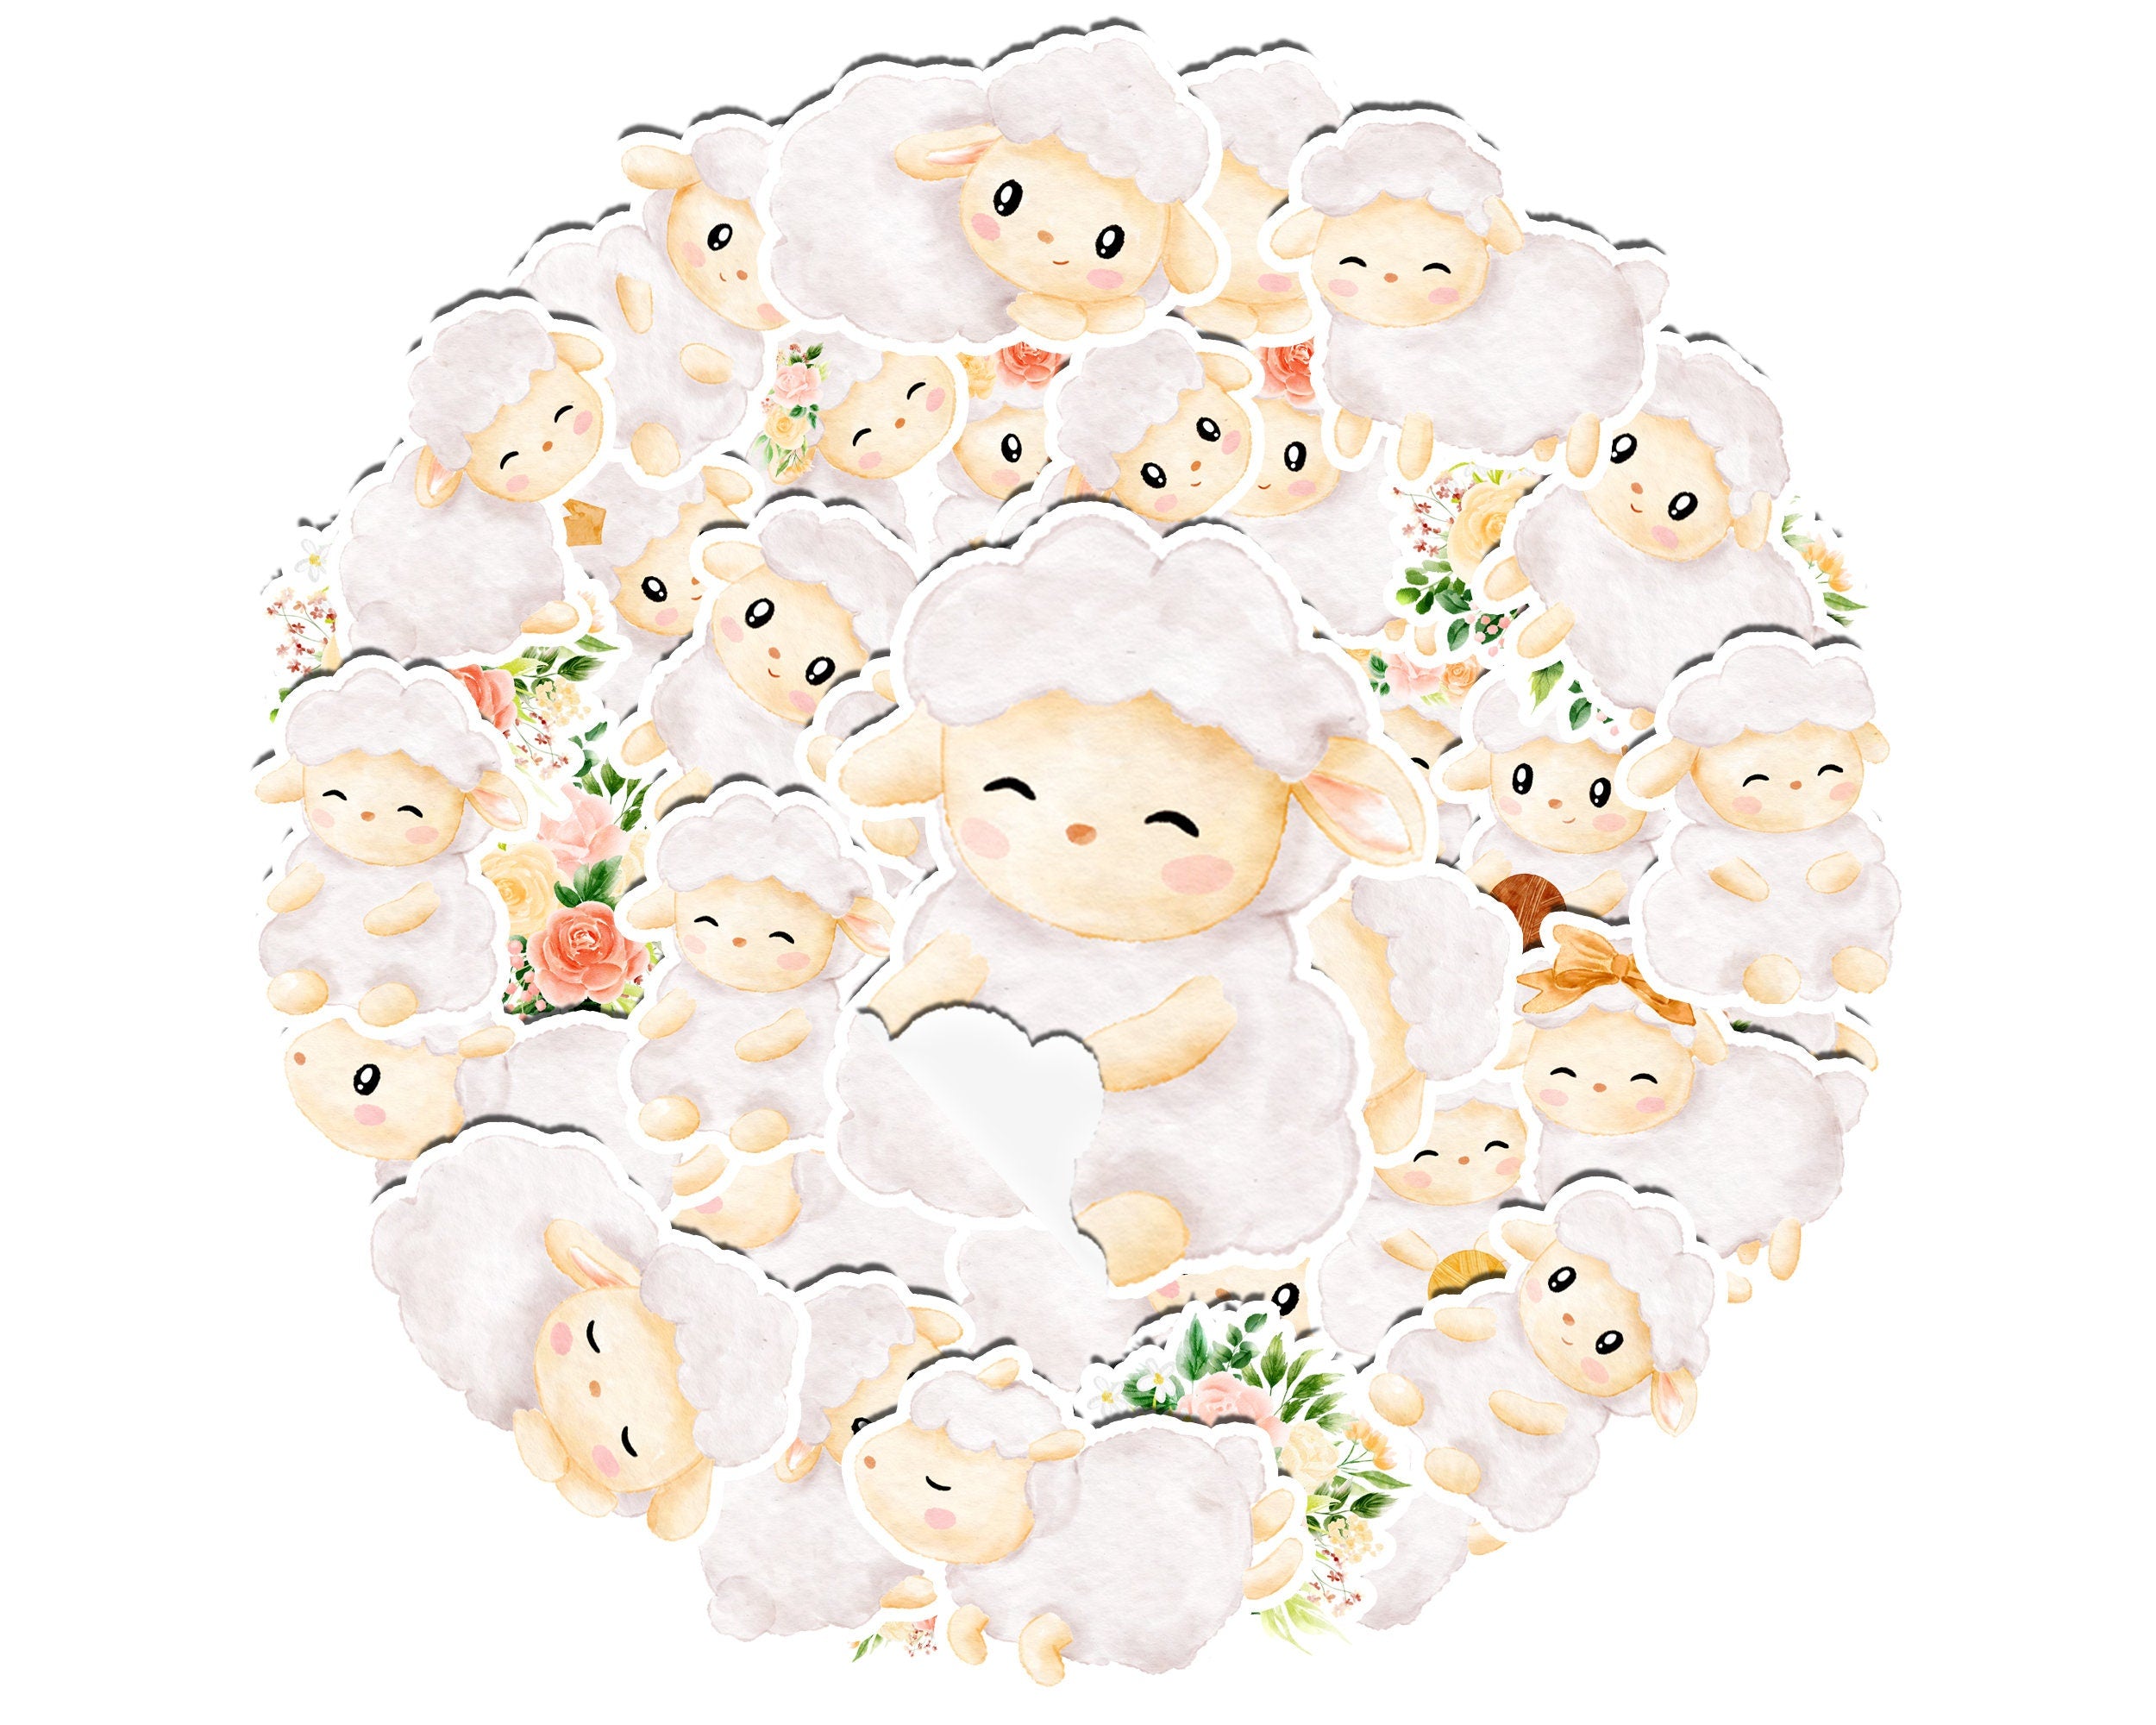 Fluffy Little Sheep Sticker Collection